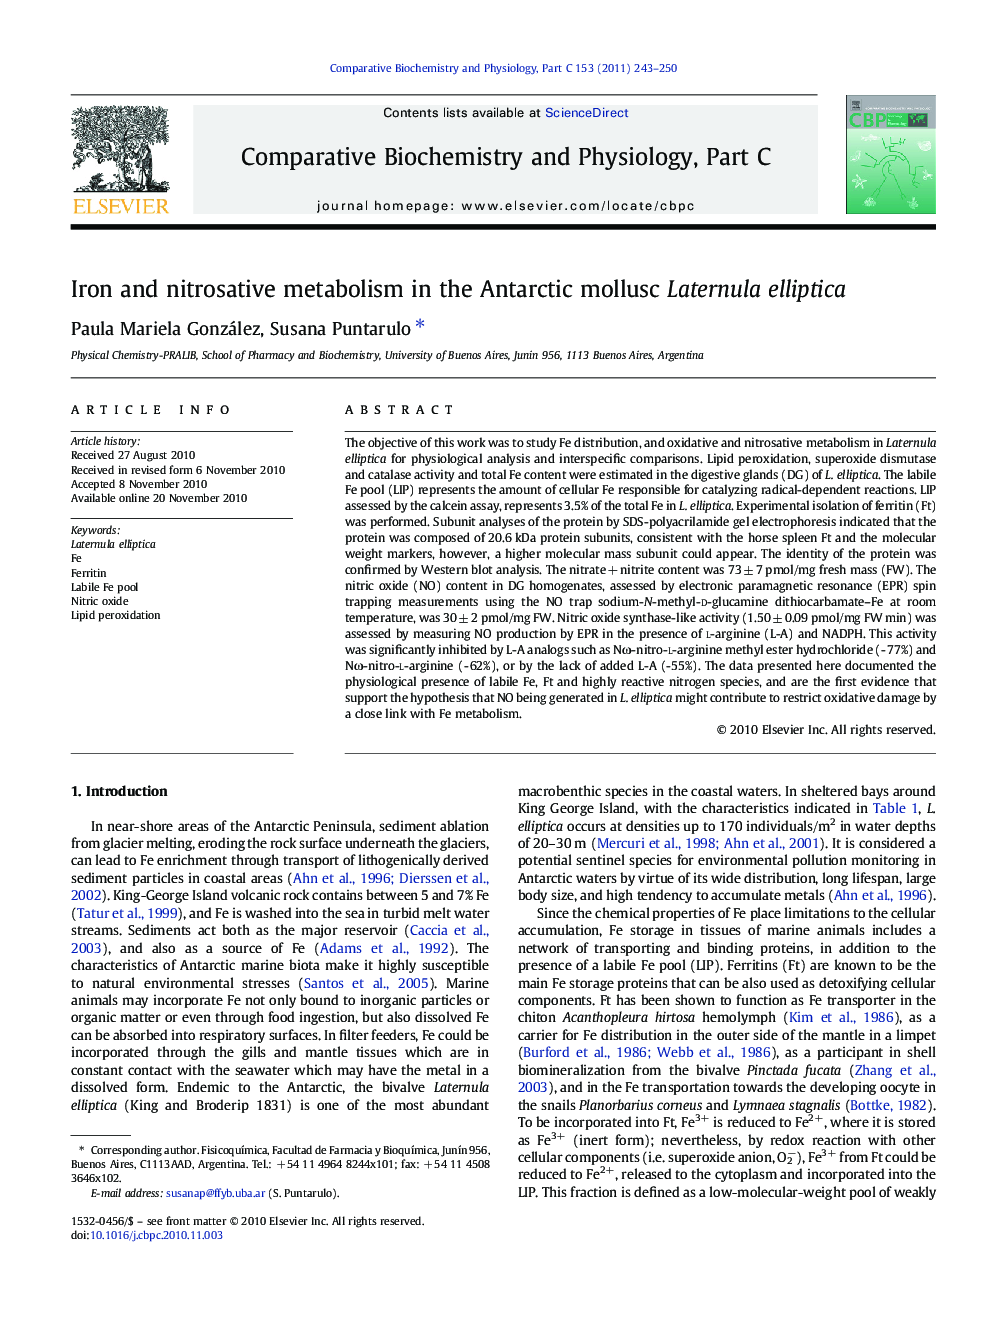 Iron and nitrosative metabolism in the Antarctic mollusc Laternula elliptica